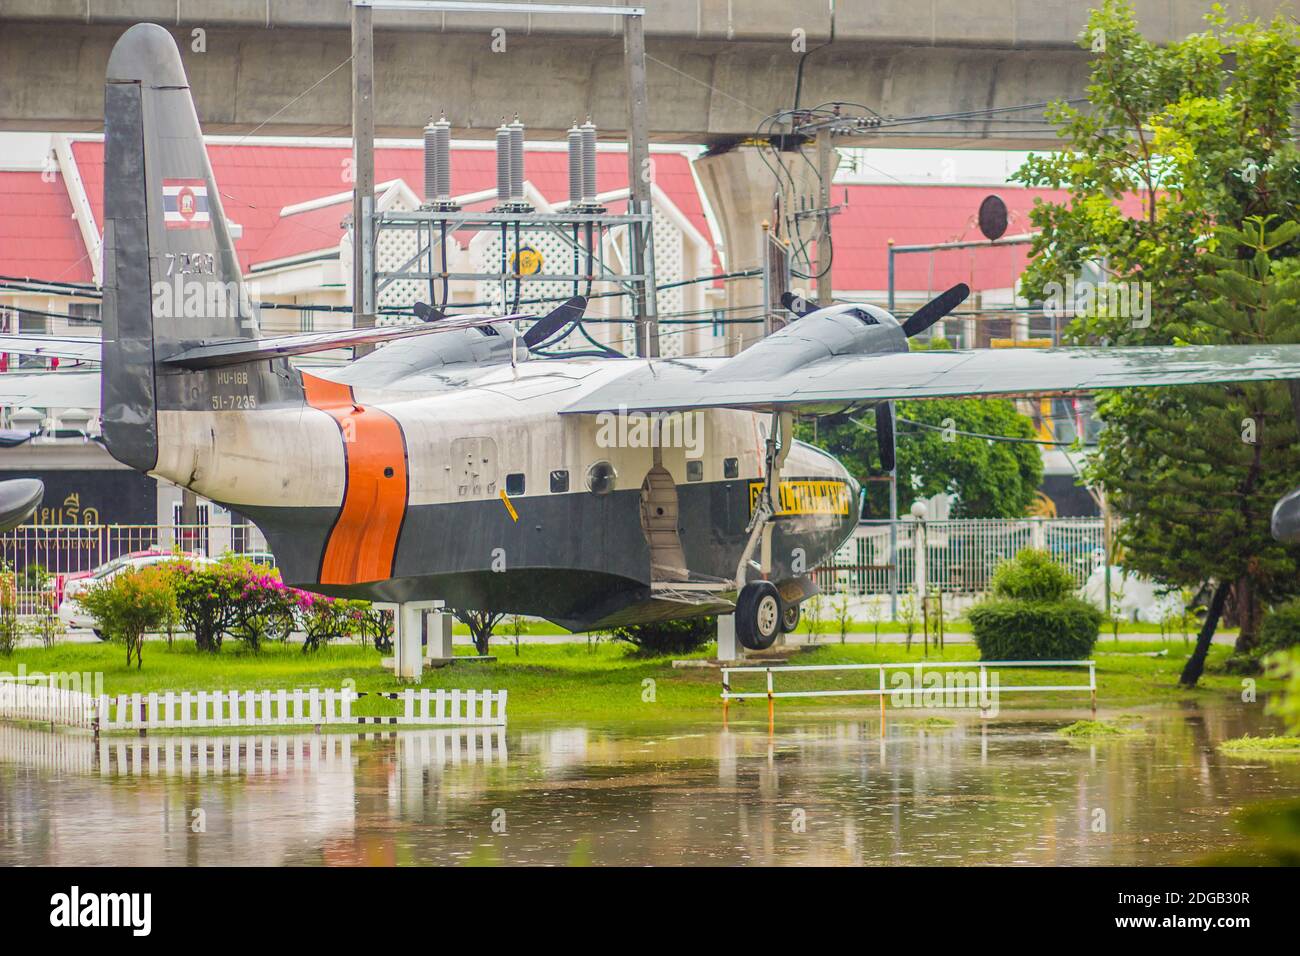 Samut Prakan, Thailand - September 18, 2017: Old aircraft model Grumman HU-16B, 51-7235, Albatross at Naval Museum, Samut Prakan, Thailand Stock Photo